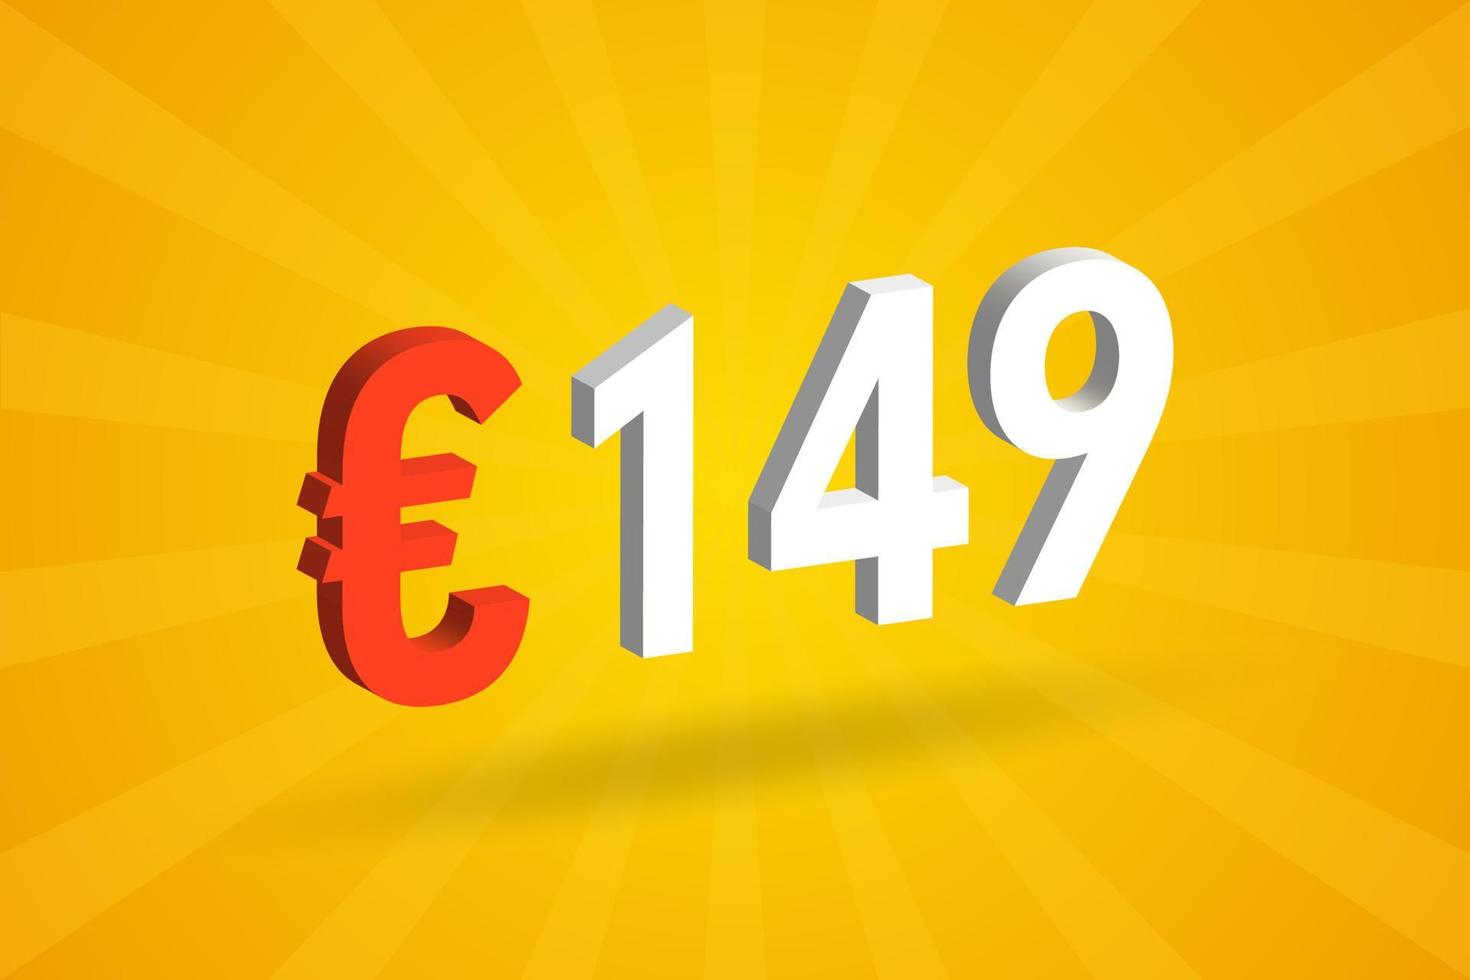 149 Euro Currency 3D vector text symbol. 3D 149 Euro European Union Money stock vector